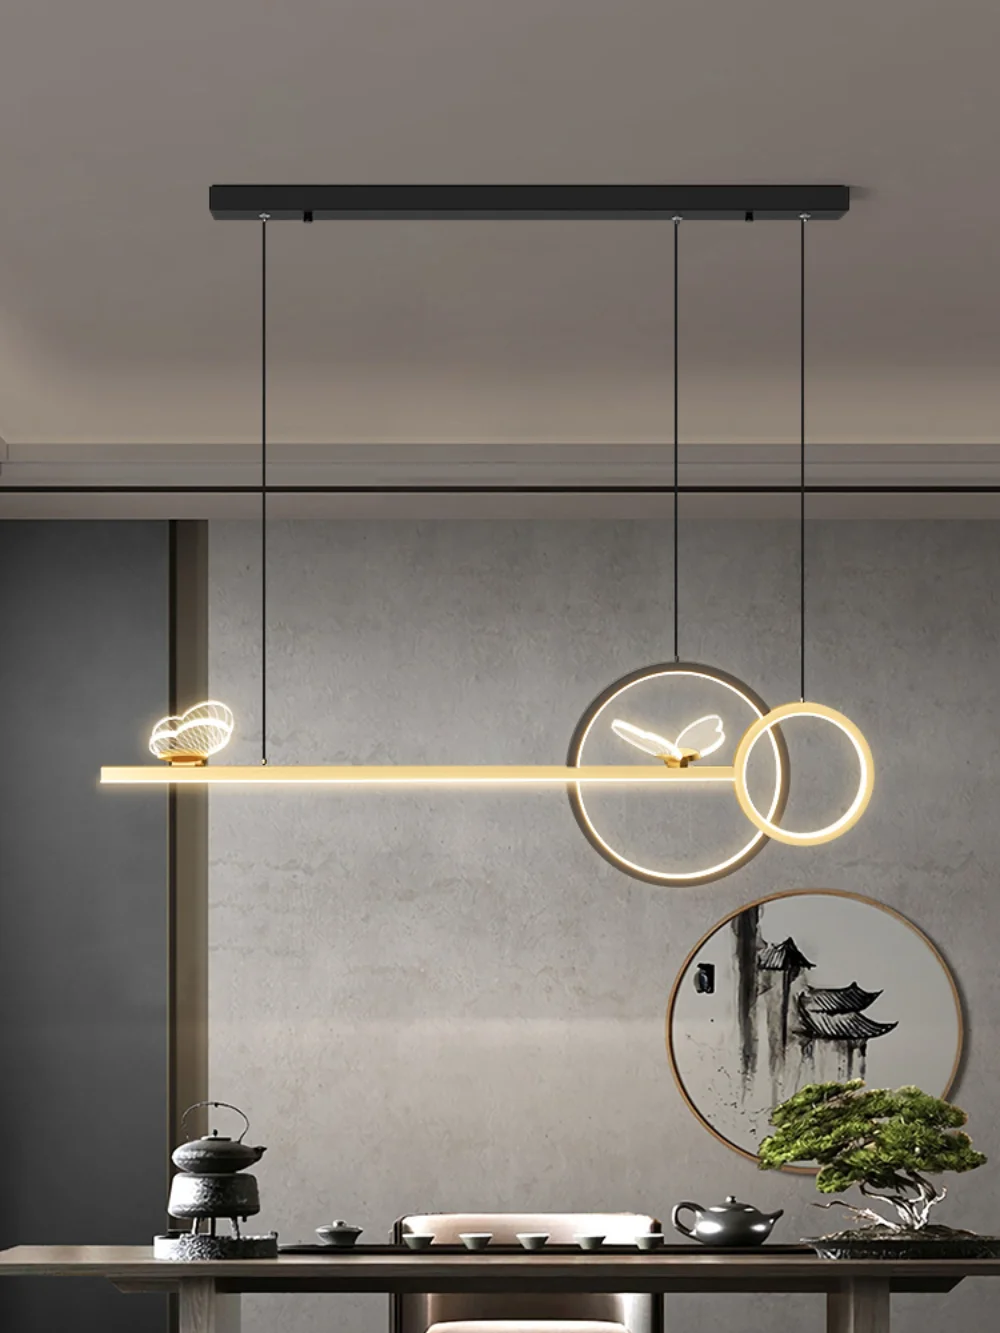 

Dining Room lamp modern minimalist nordic light luxury bar counter 2021 new chandelier design creative starry sky lamps